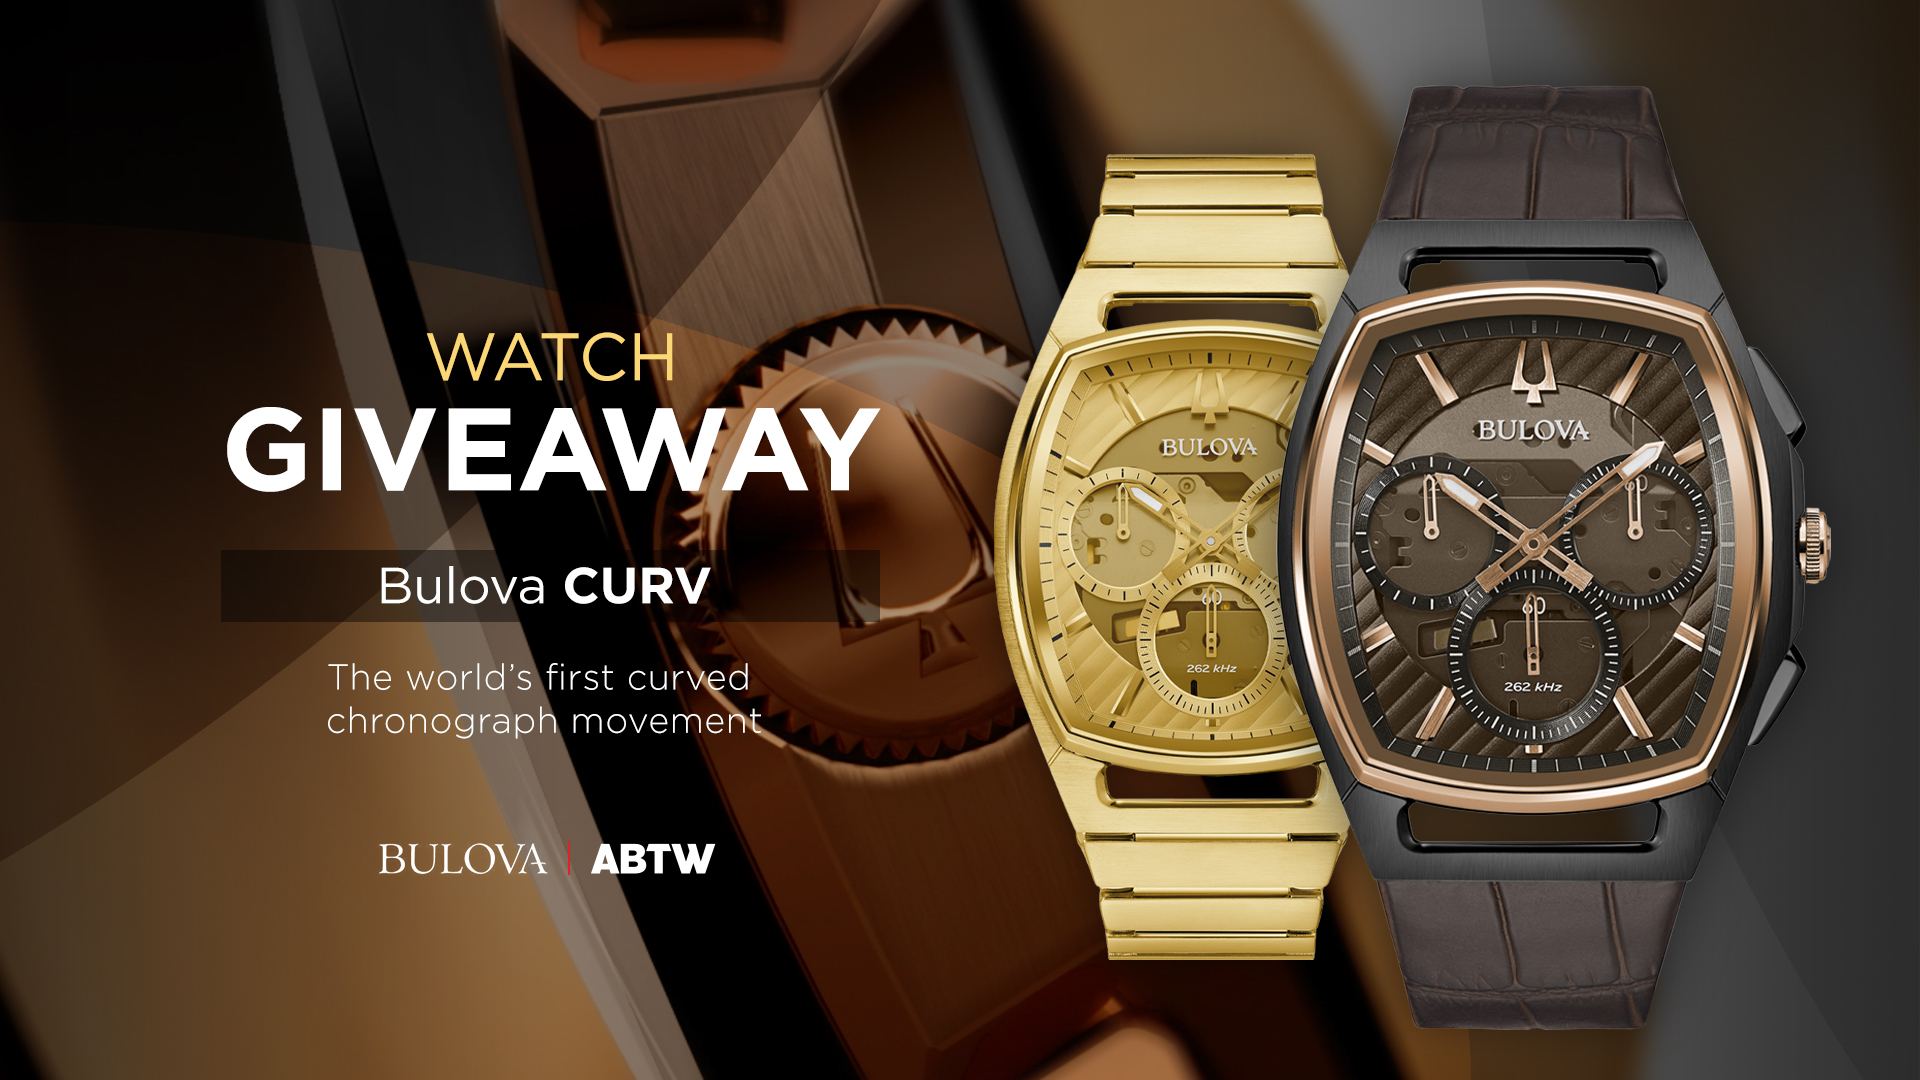 Winner Announced: Bulova CURV Watch